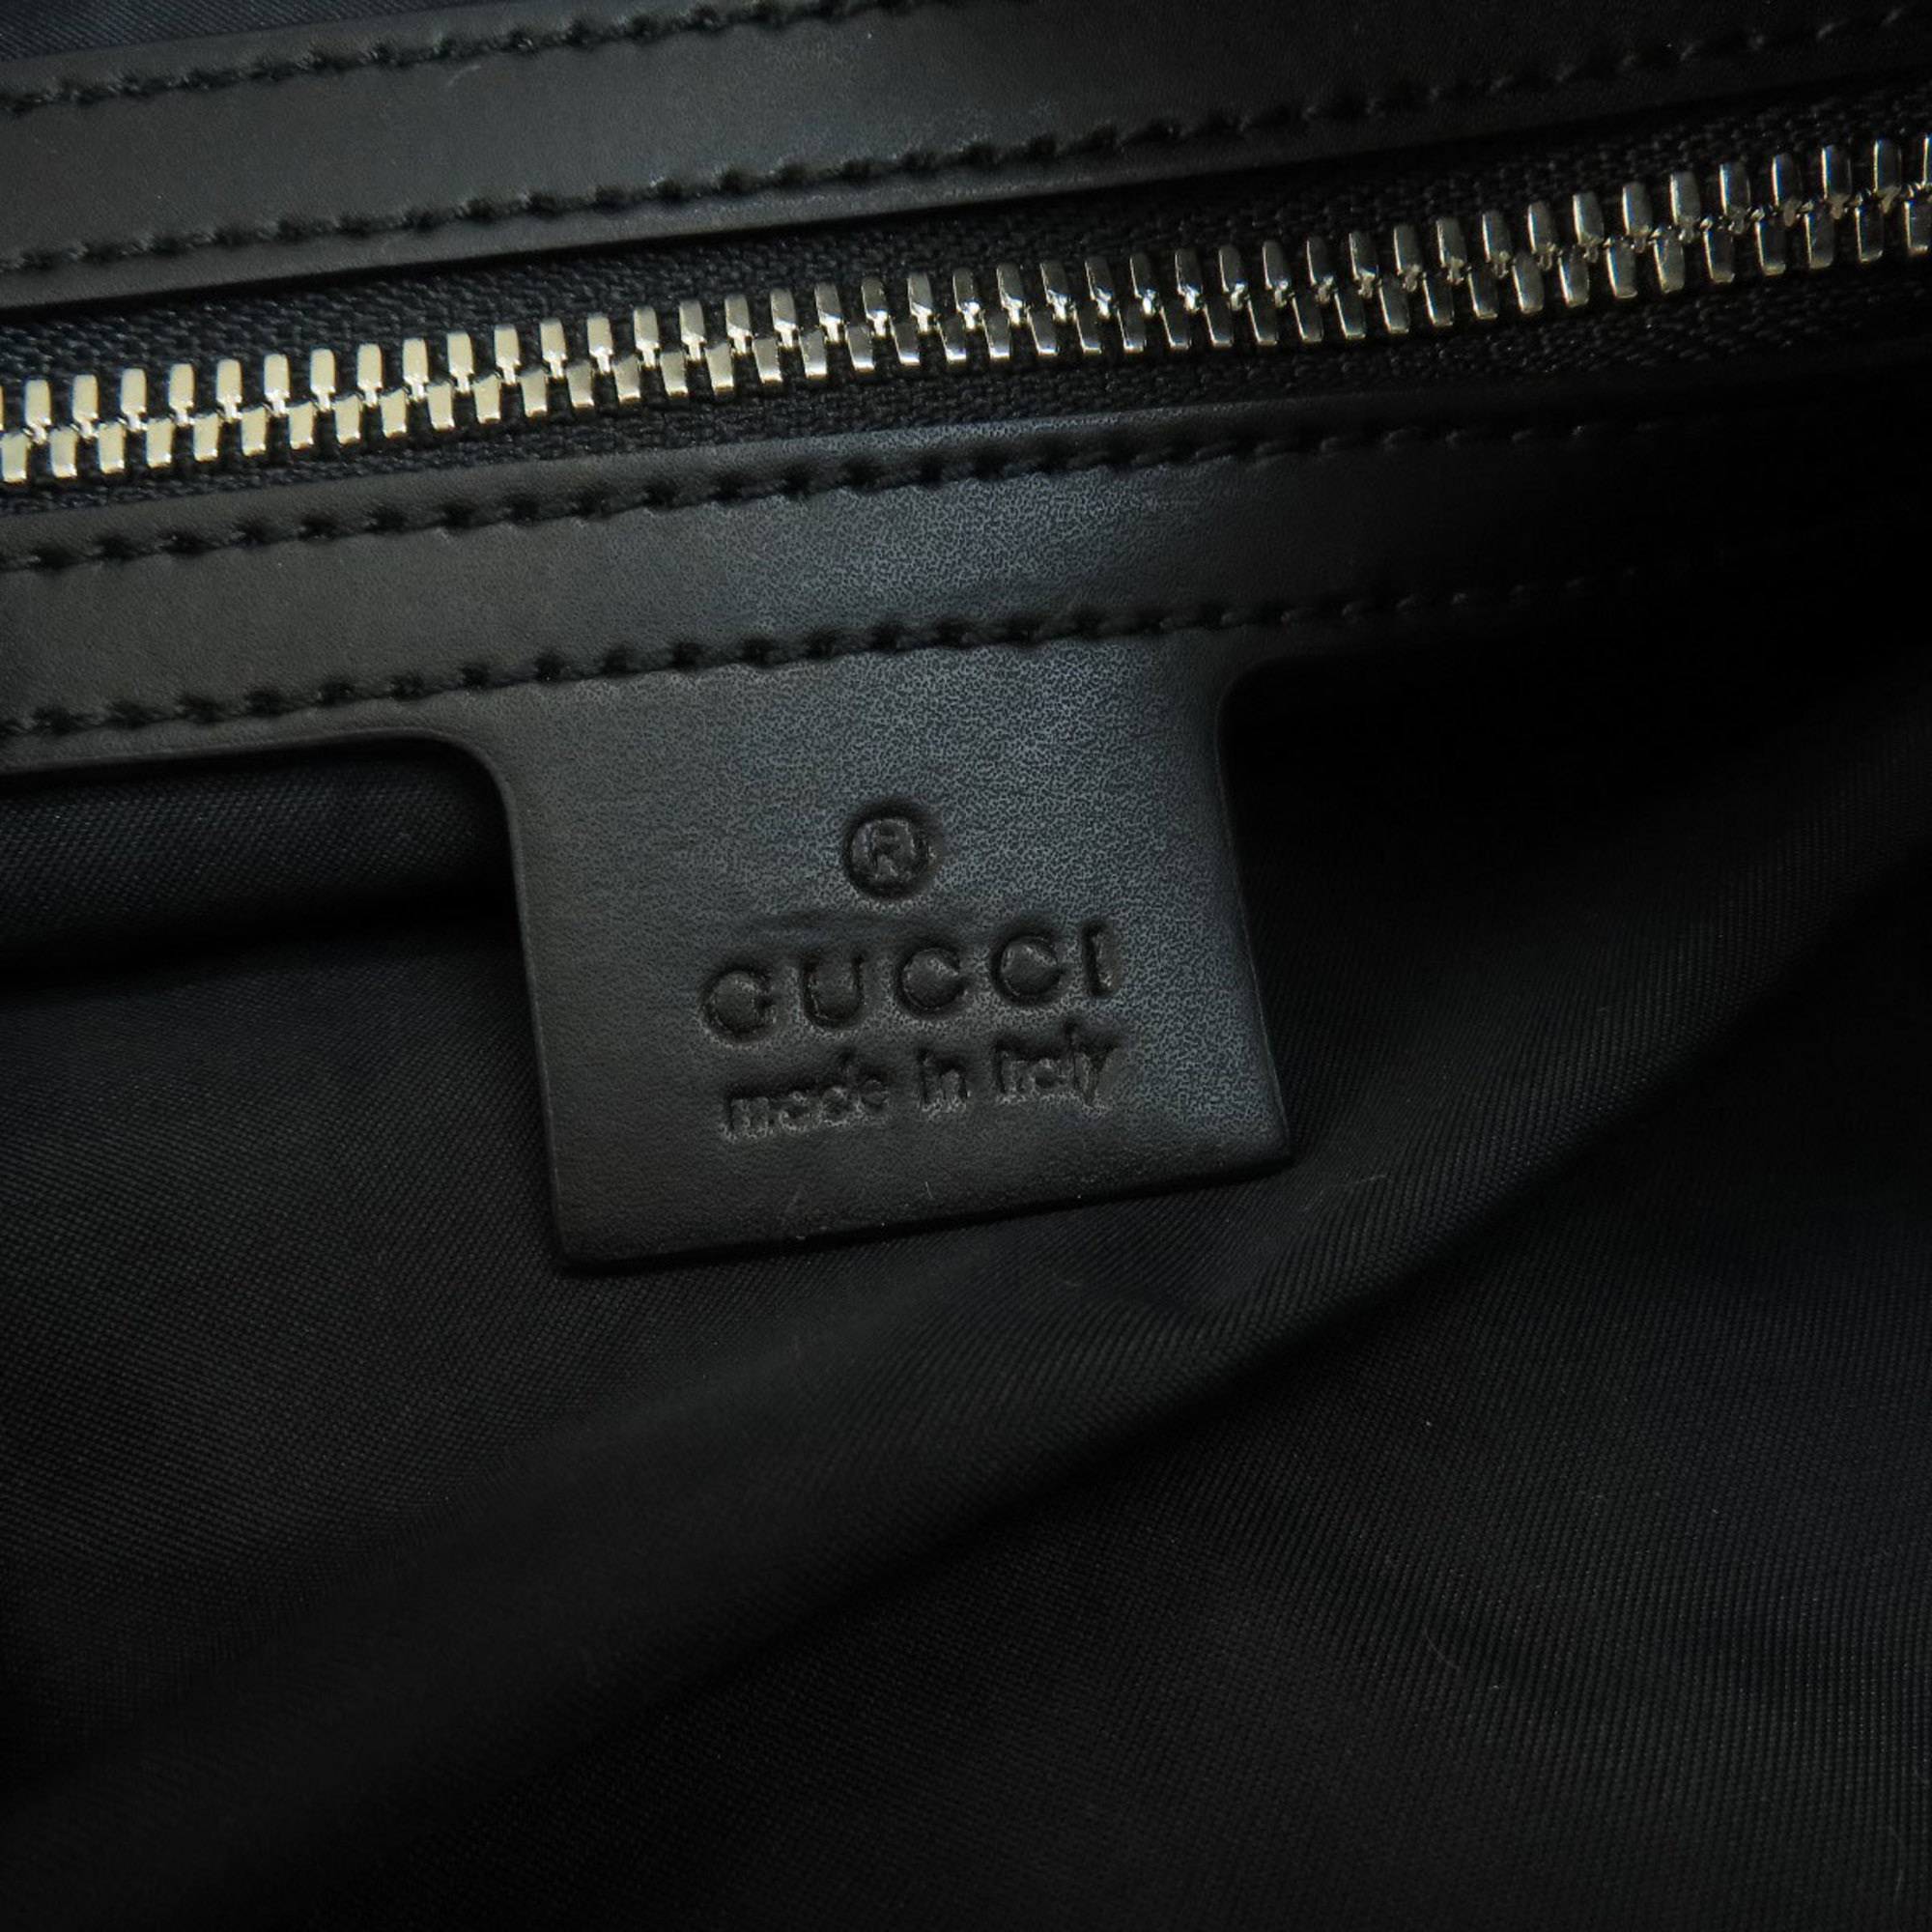 Gucci 473872 GG Supreme Backpack/Daypack PVC Women's GUCCI